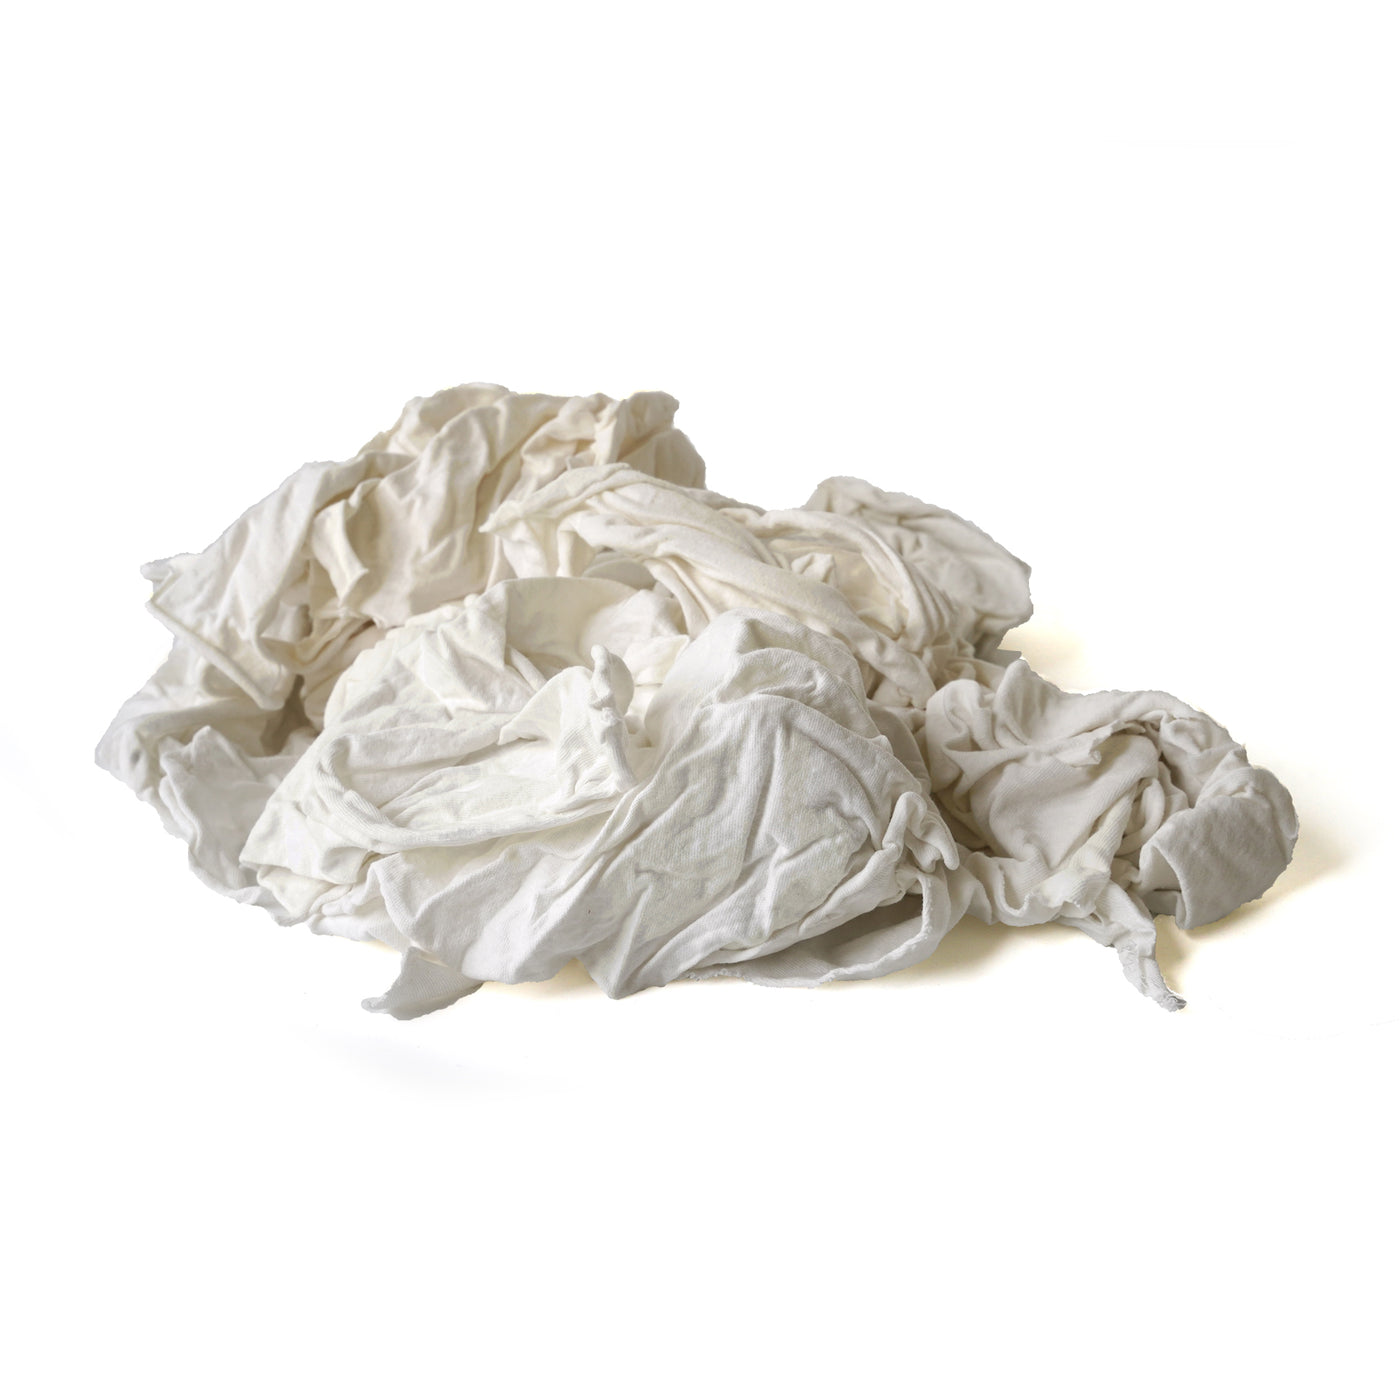 Tricol Clean Cotton T-Shirt Rags, 1 lb